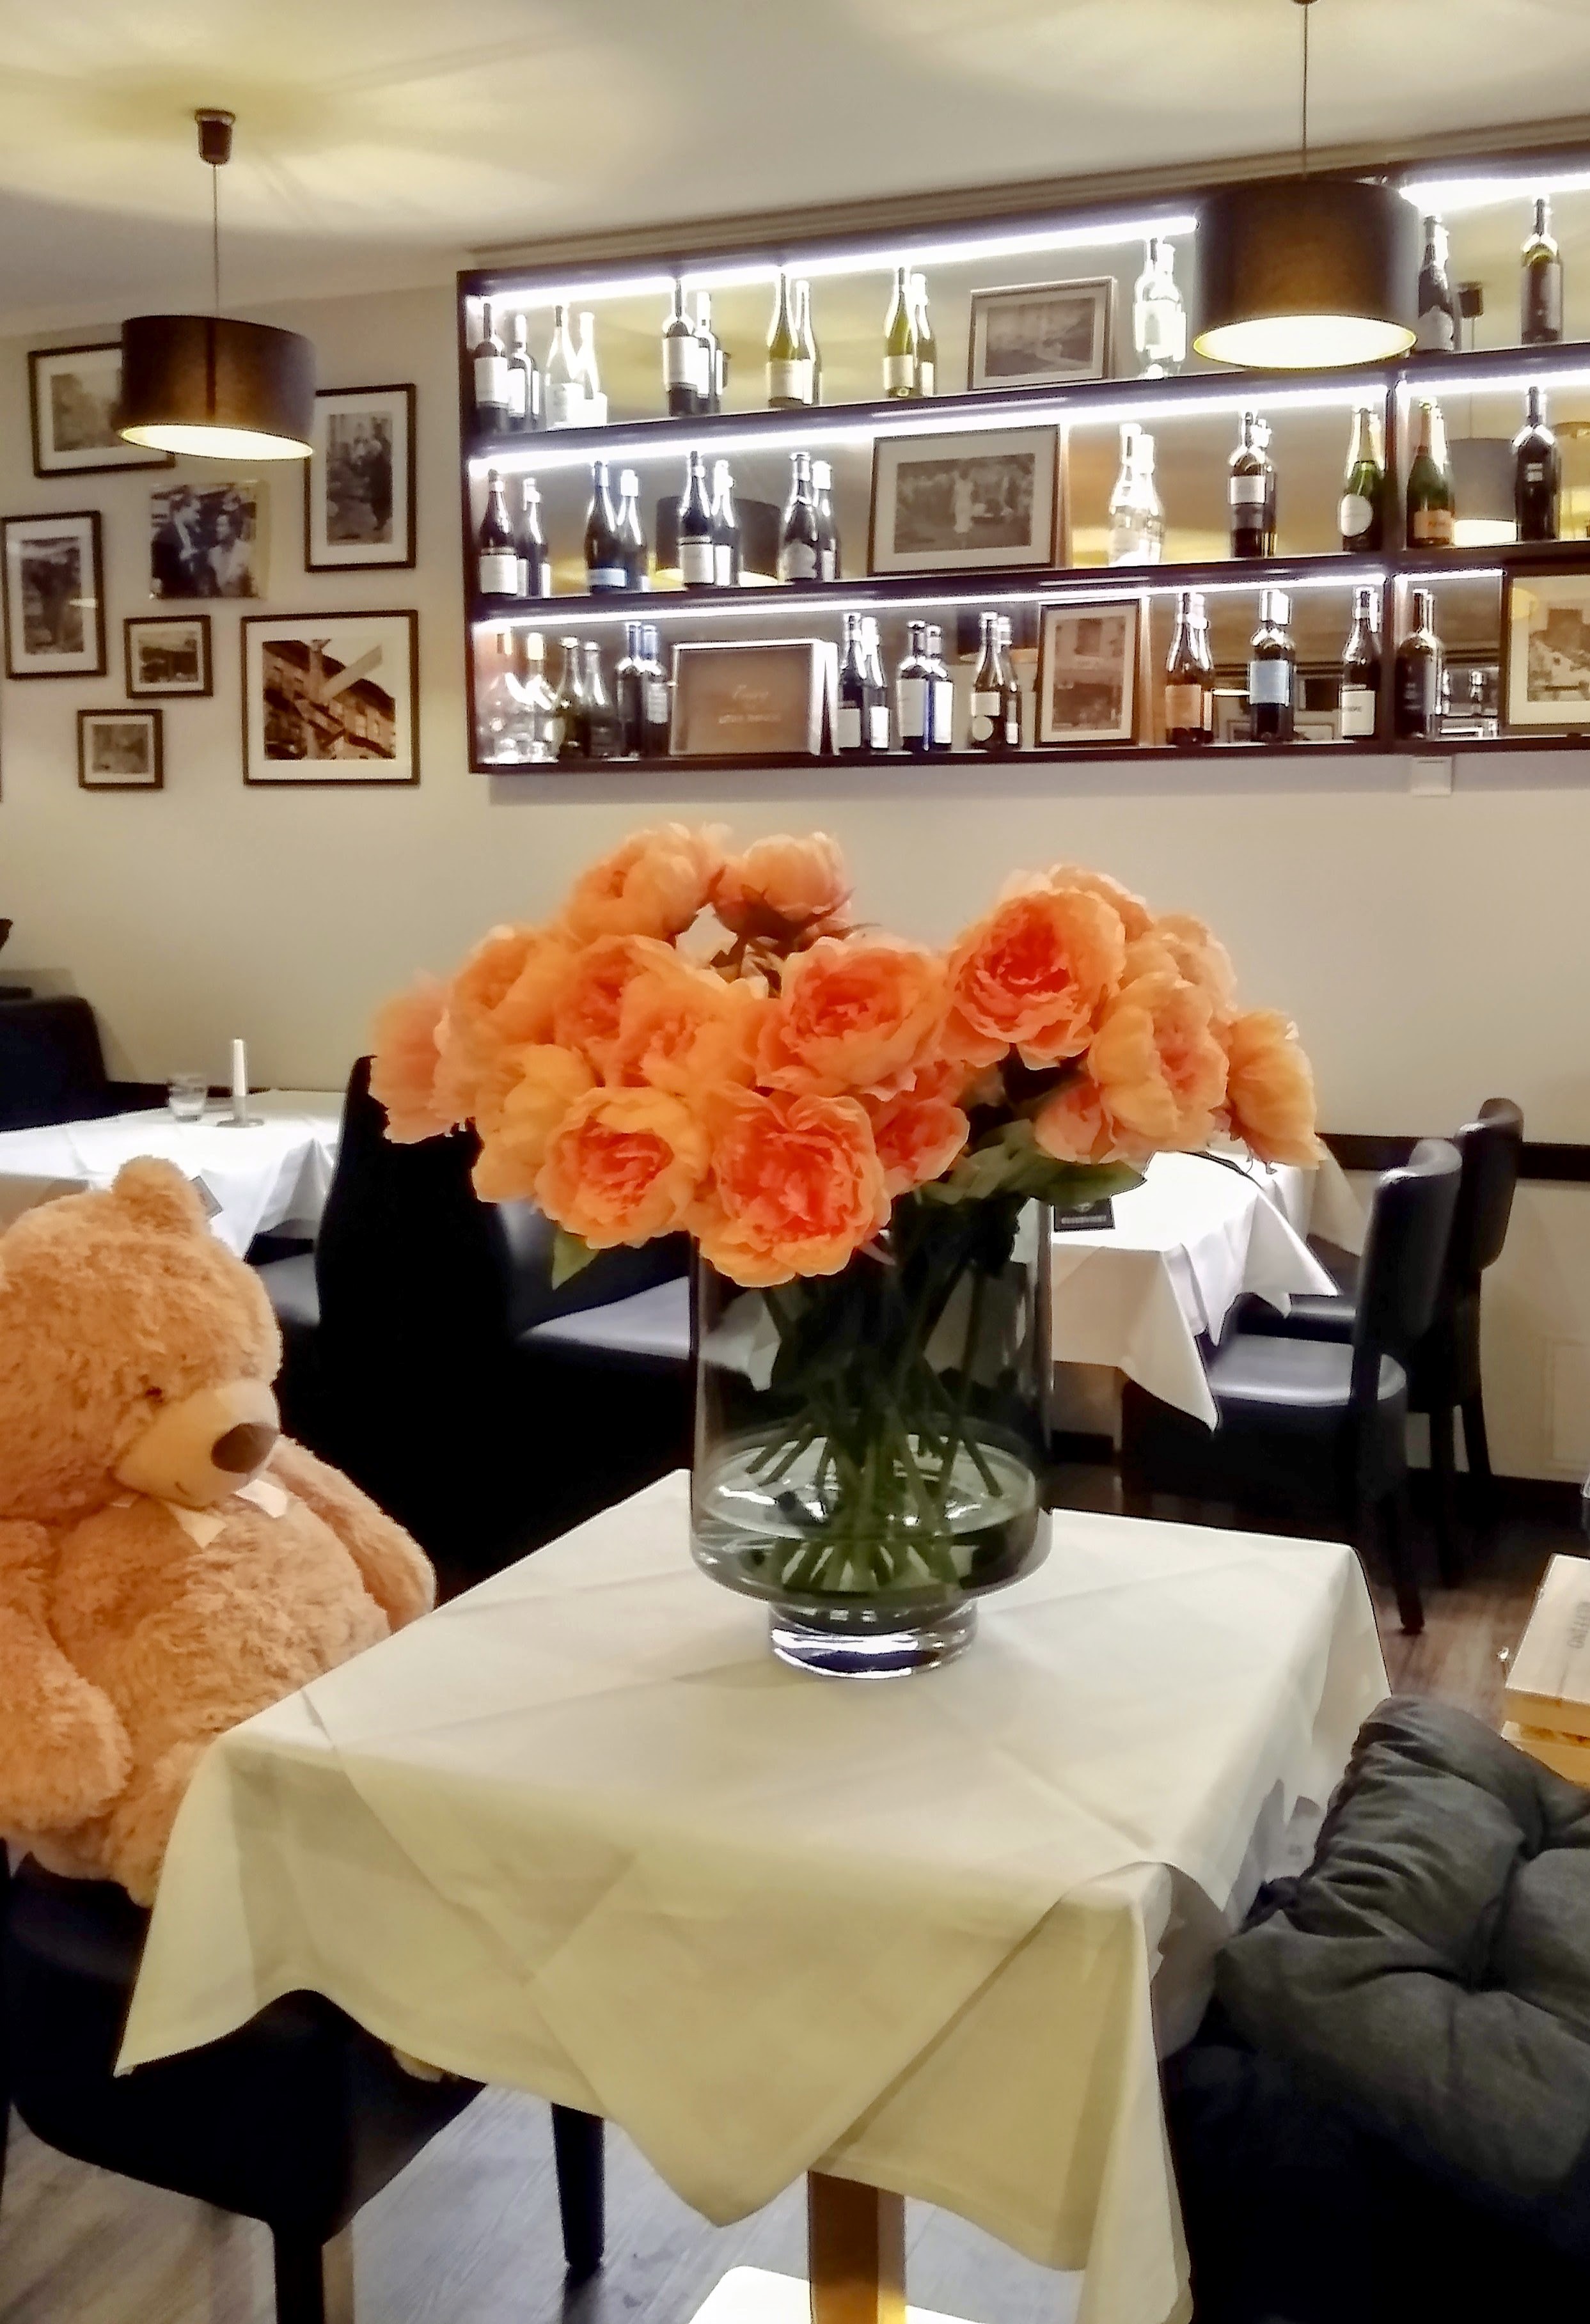 Little Italy Restaurant Interior with stuffed bear, Wiesbaden